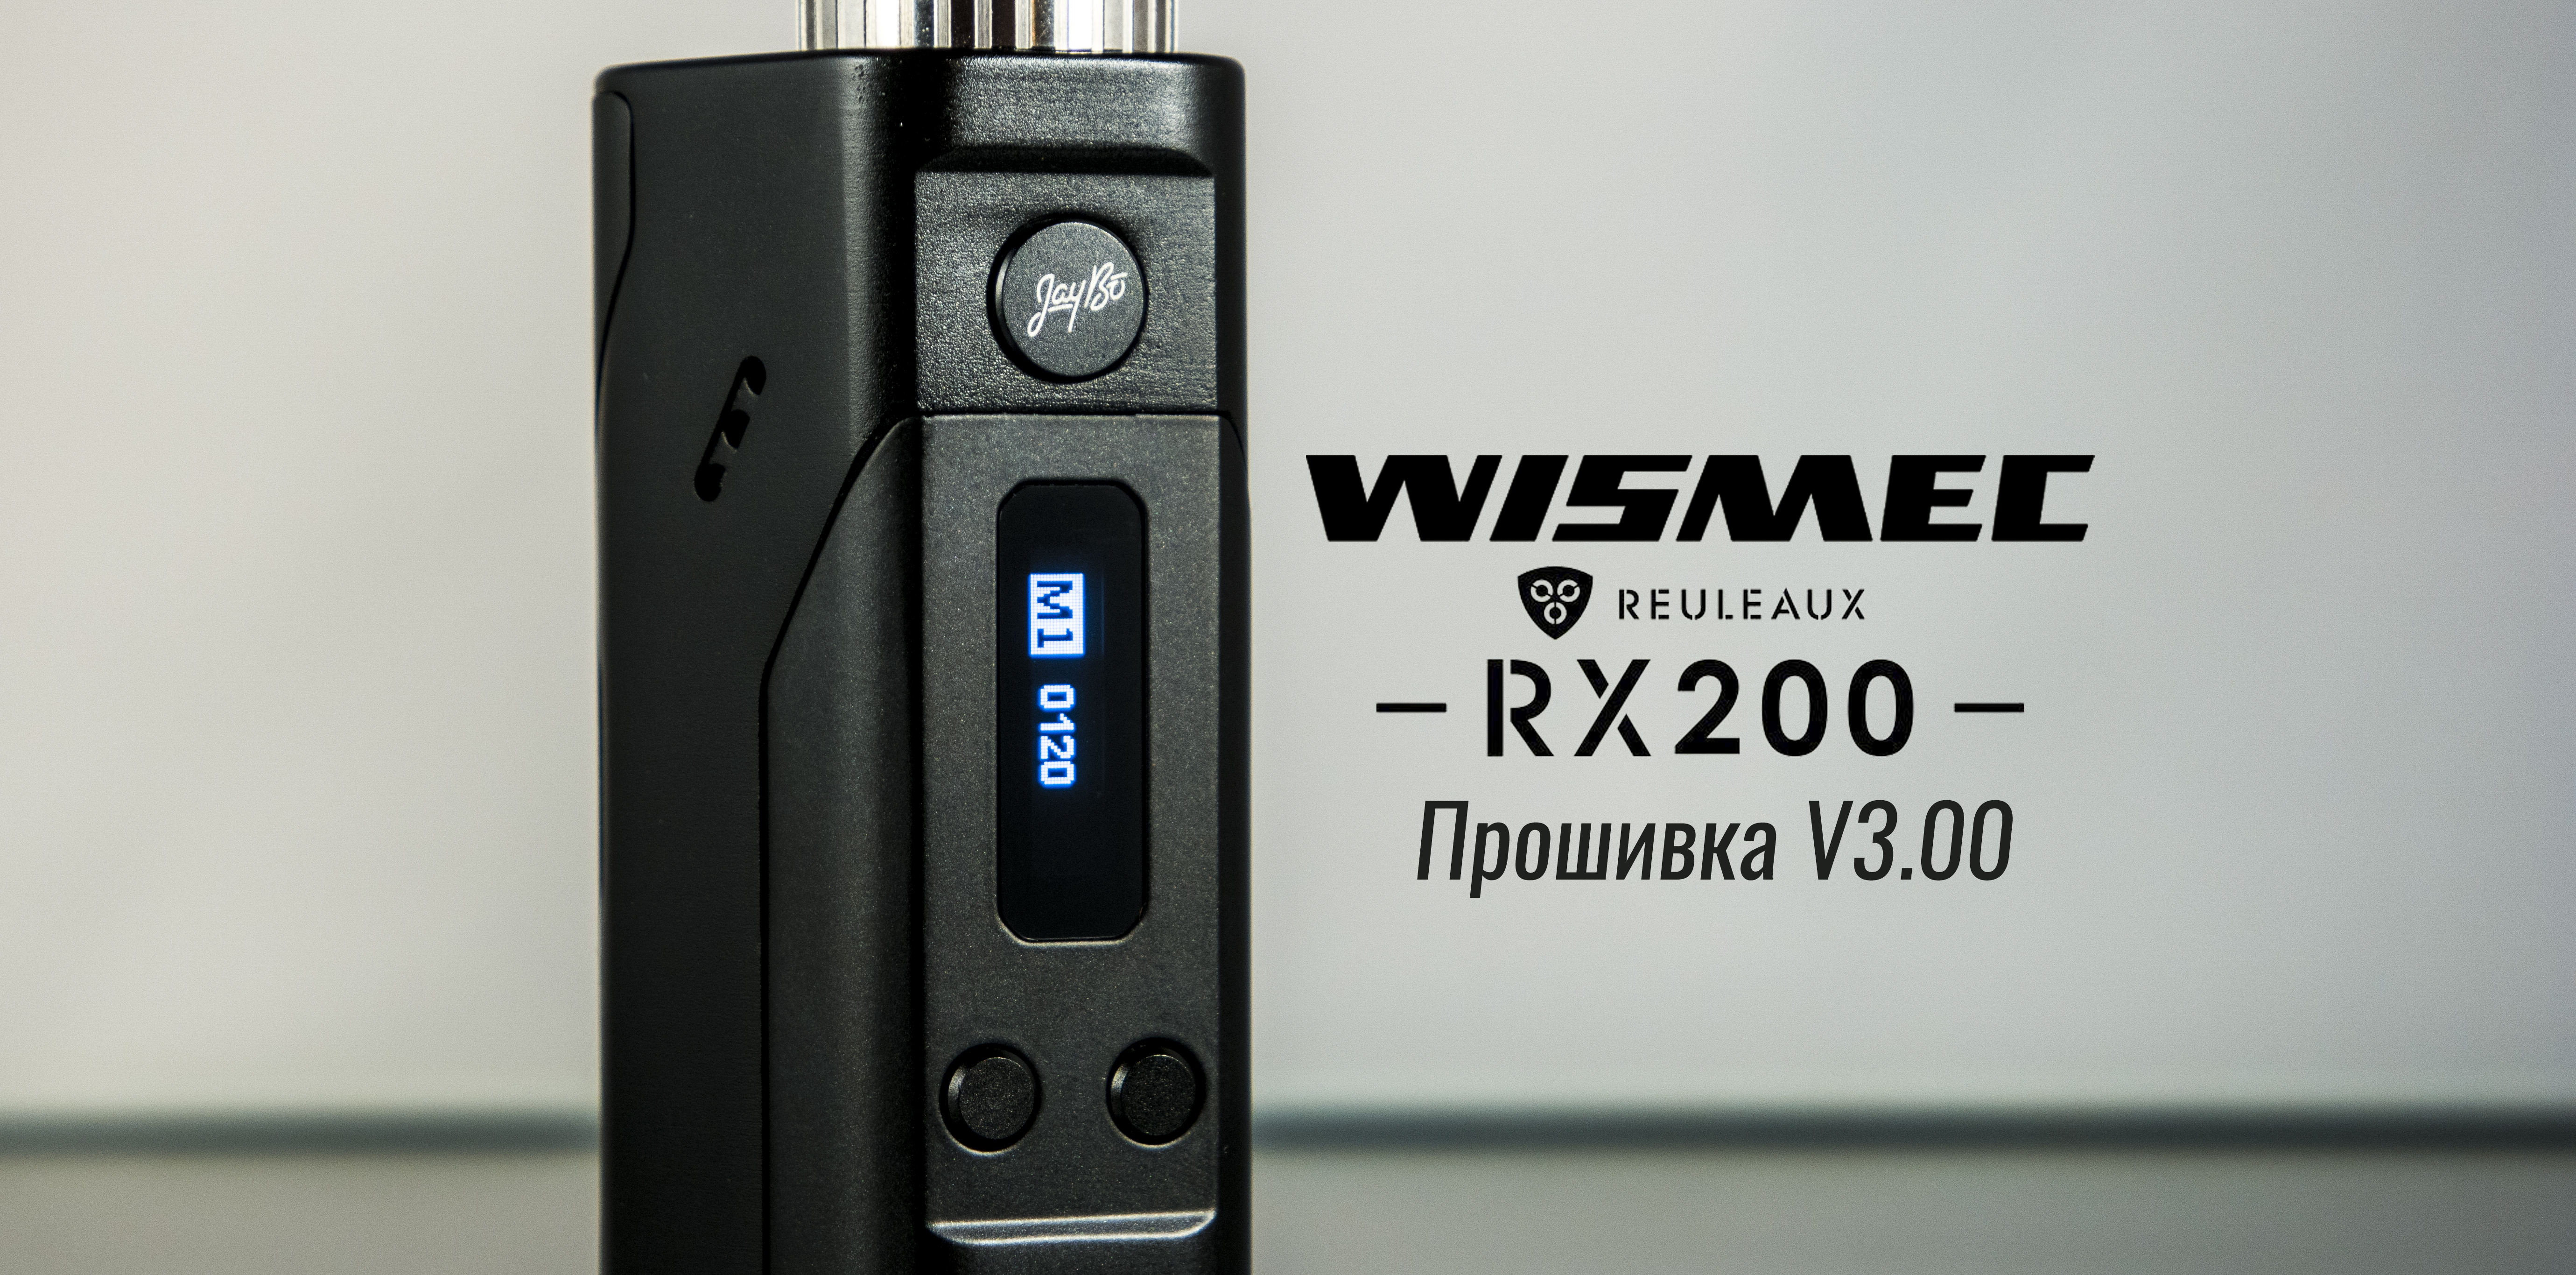 Wismec Reuleaux RX200 - новые функции в прошивке V3.00